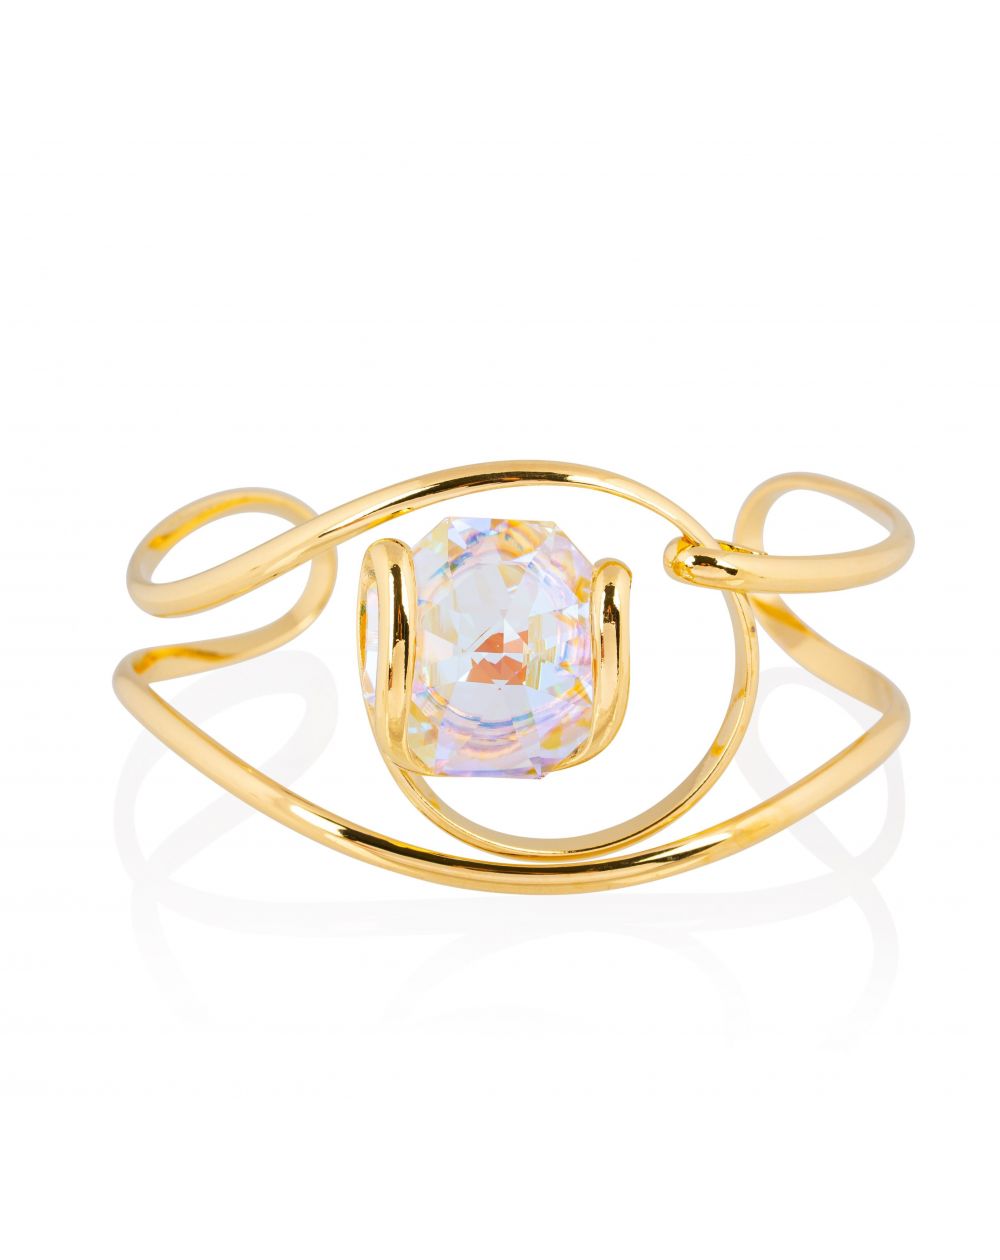 Andrea Marazzini bijoux - Bracelet cristal Swarovski Octagon AB